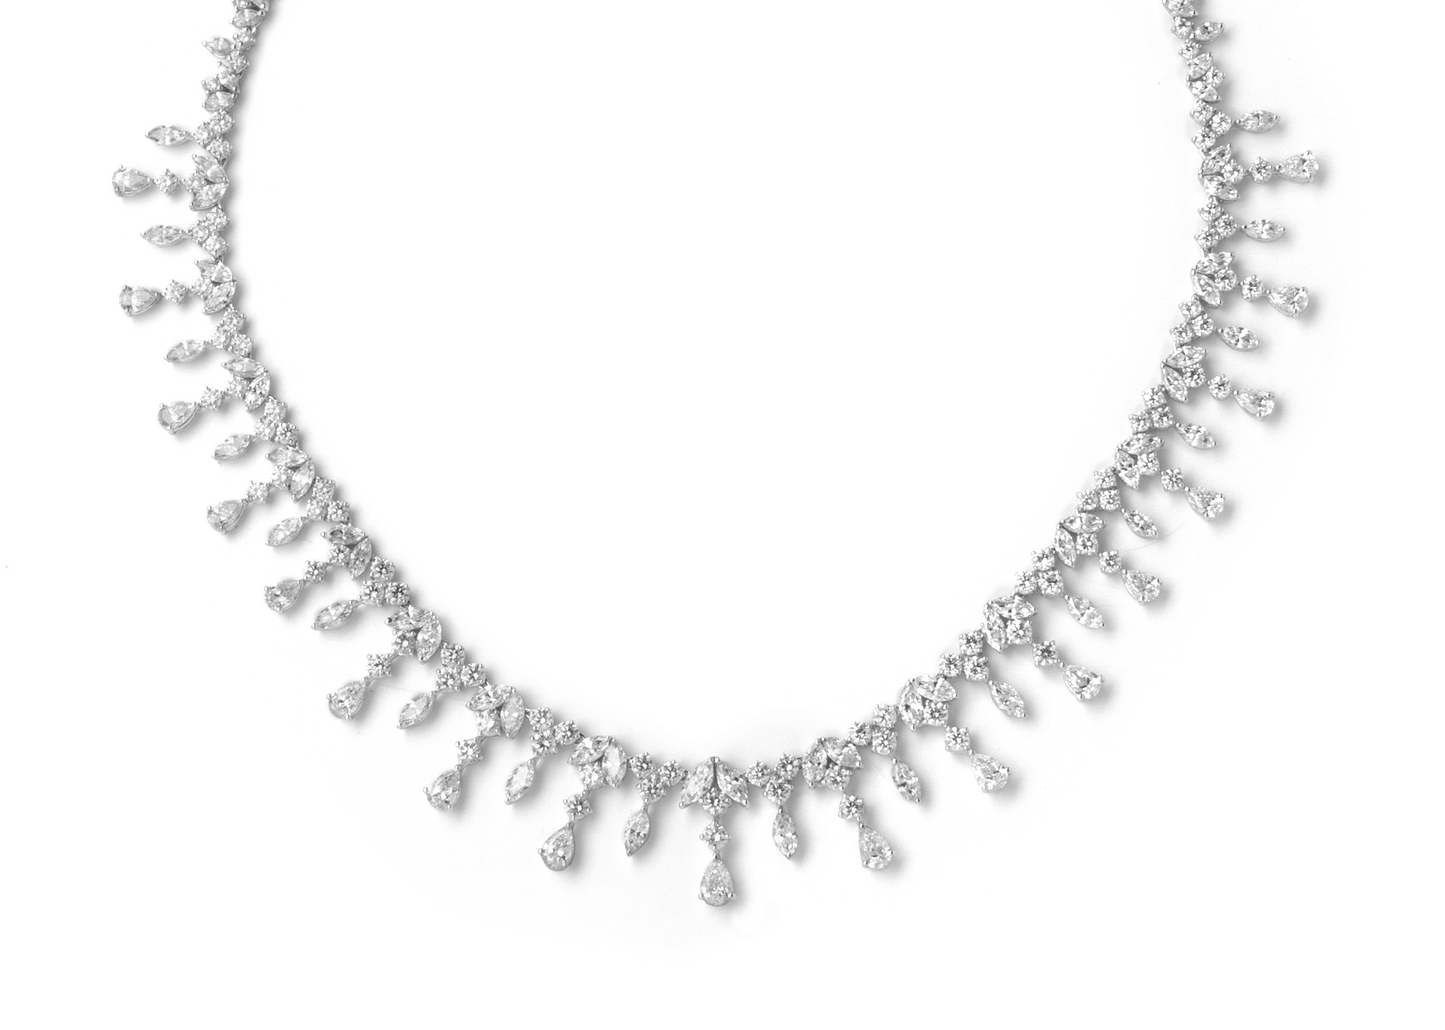 Princess 27.39ct Diamond Necklace in 14K White Gold